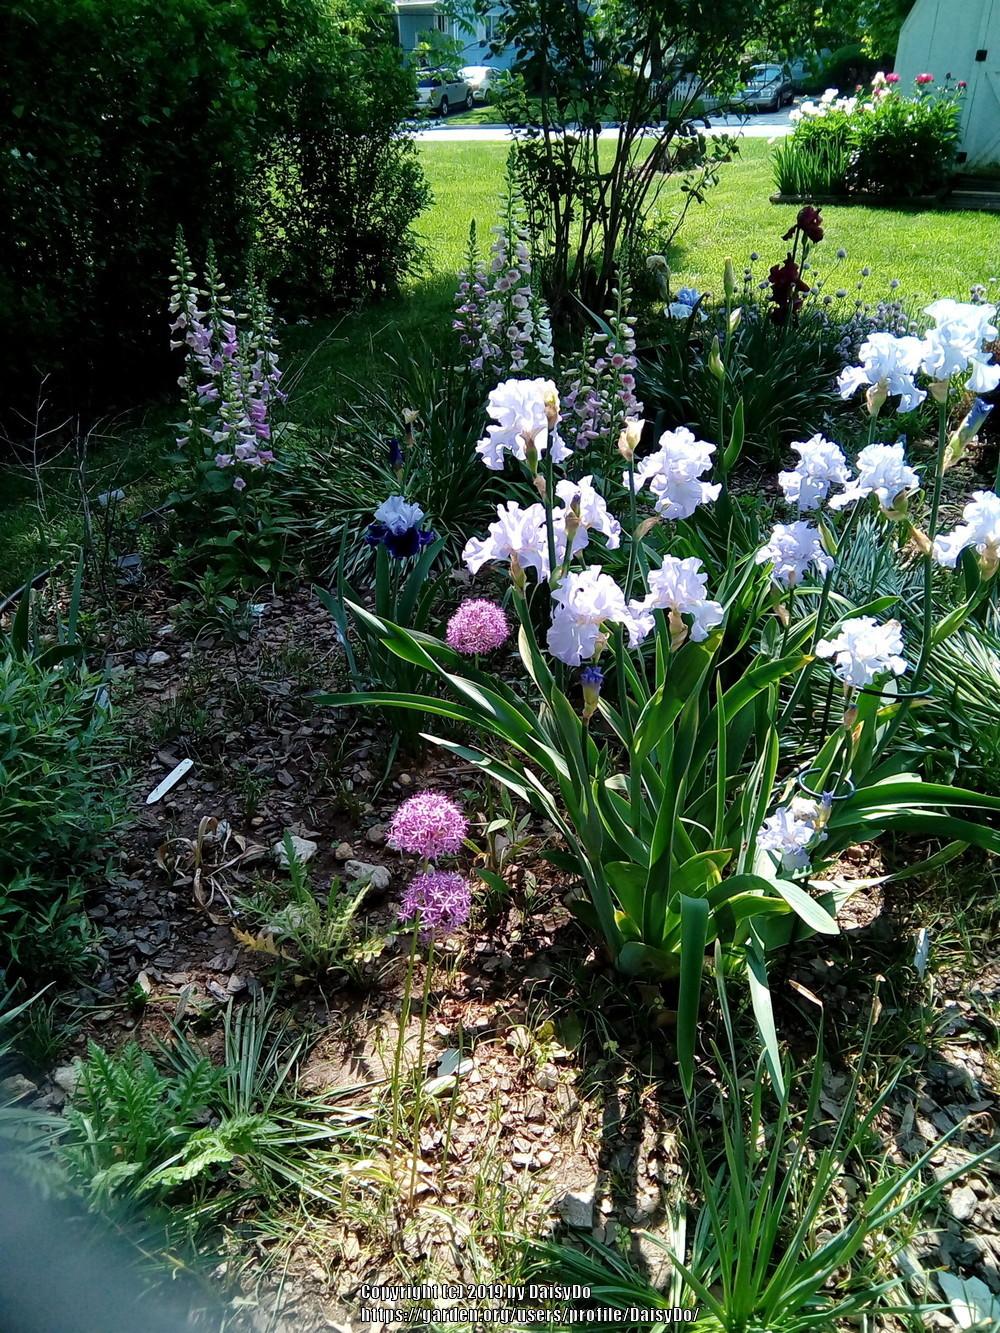 Photo of Tall Bearded Iris (Iris 'Absolute Treasure') uploaded by DaisyDo